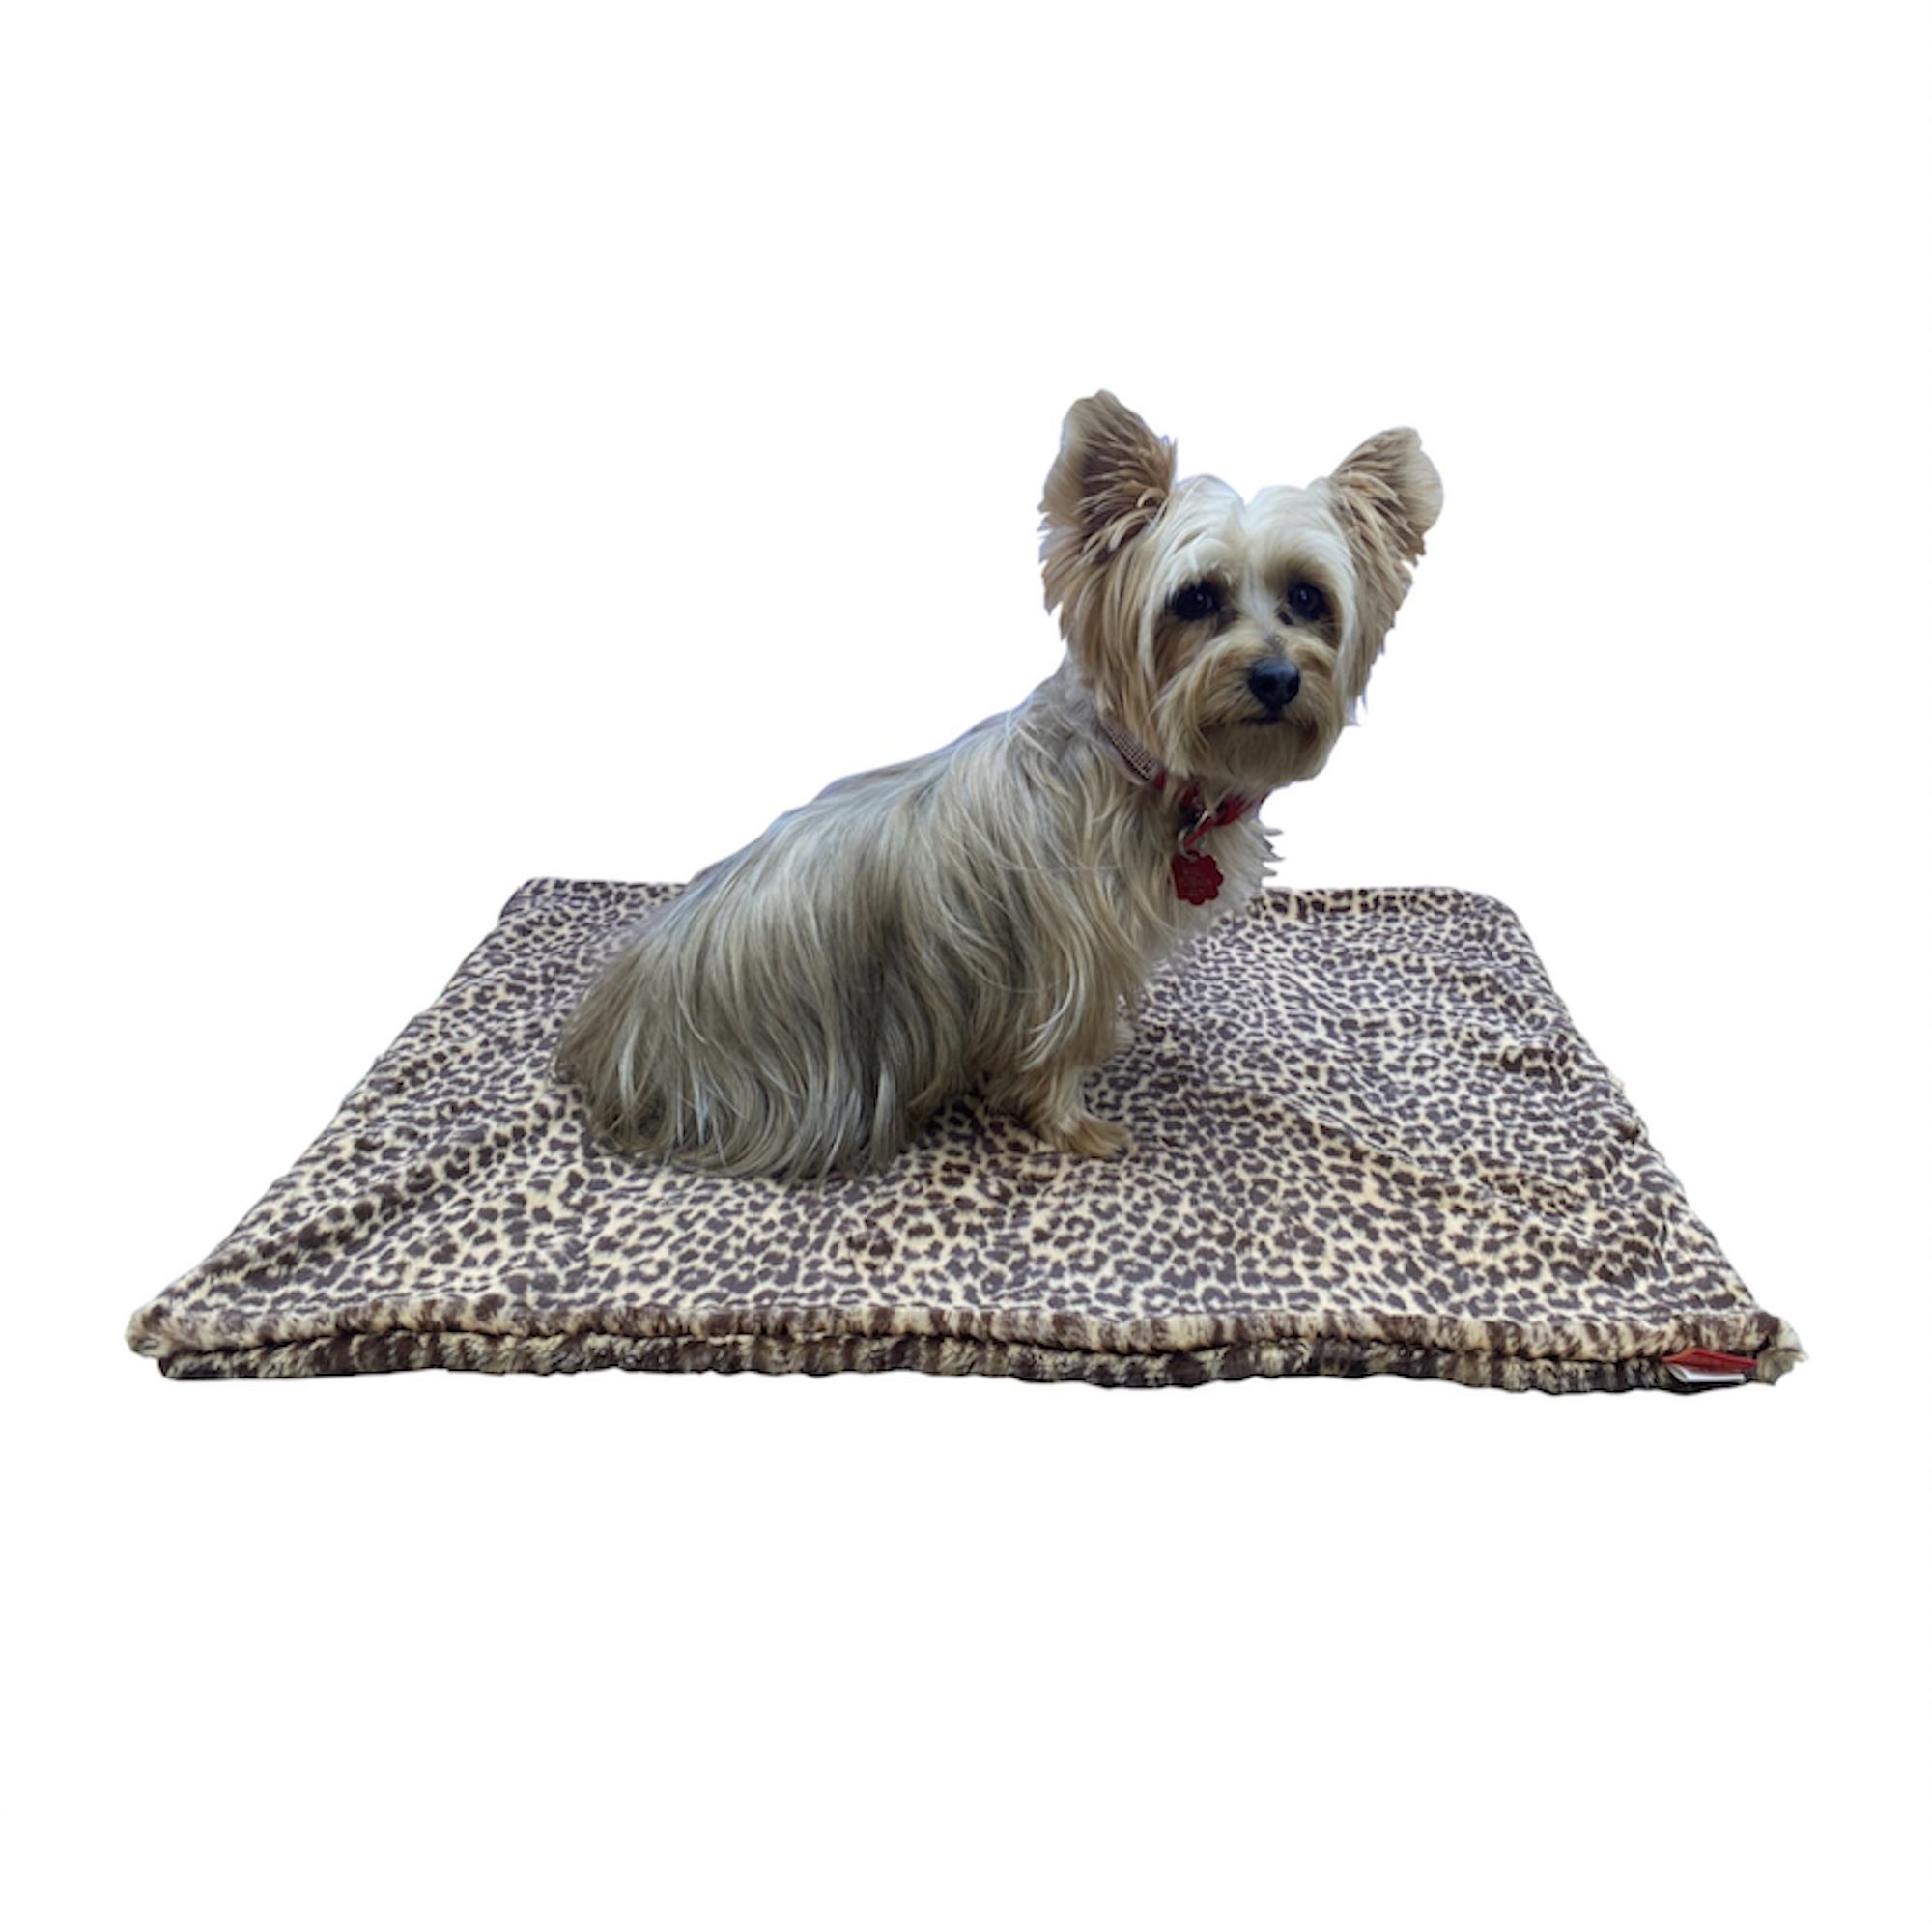 The Dog Squad Dog Blanket - Cheetah